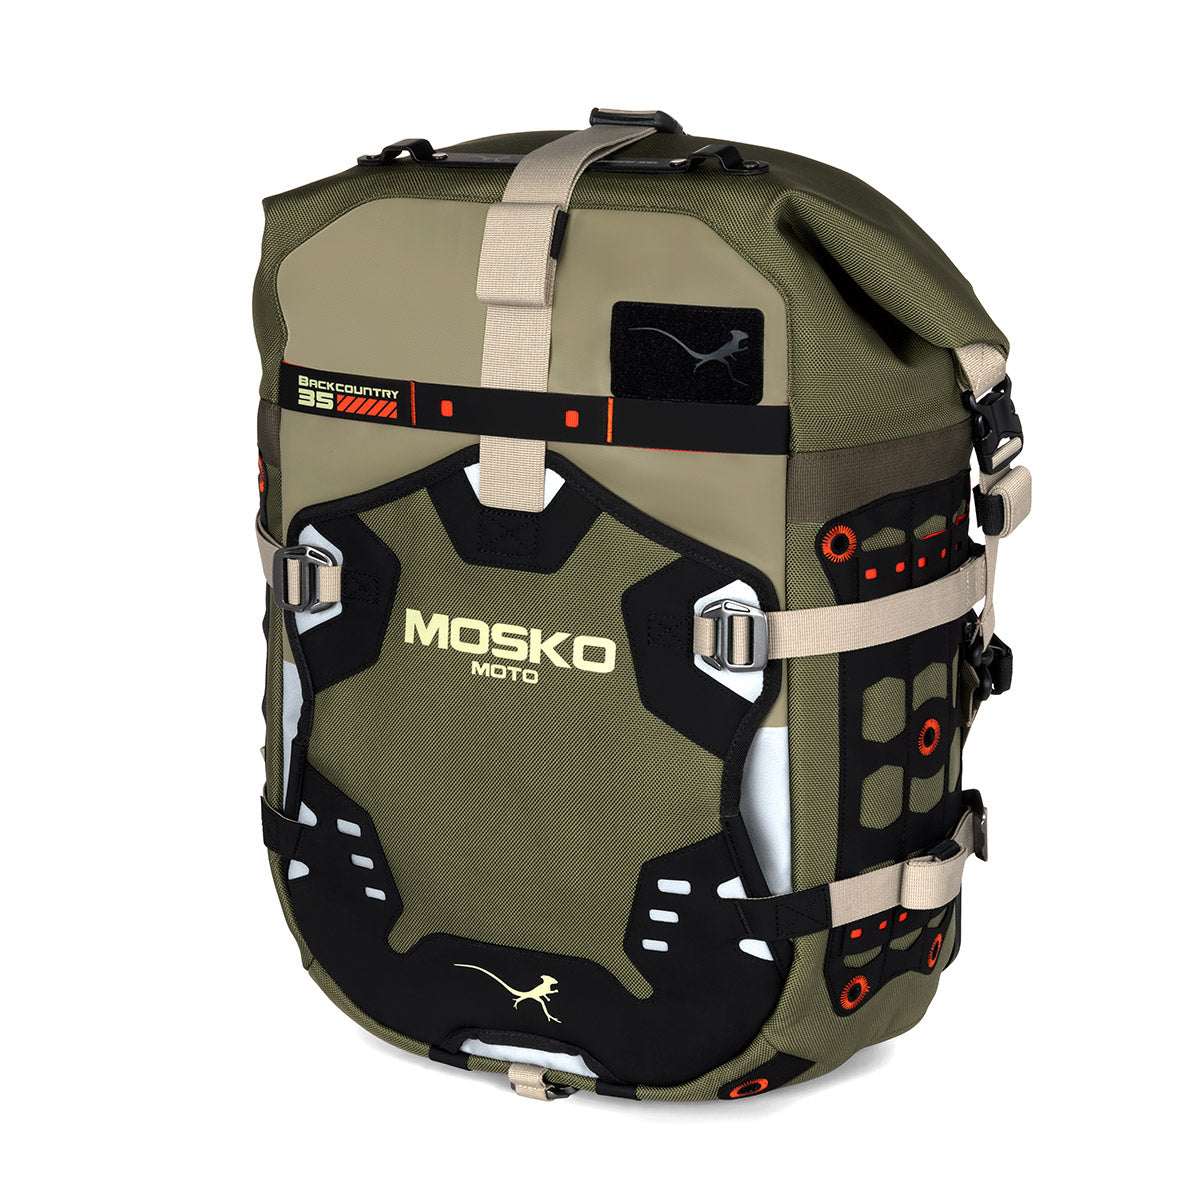 REVIEW] Mosko Moto Reckless 80L v3.0 Revolver Luggage | Honda NC700 Forum